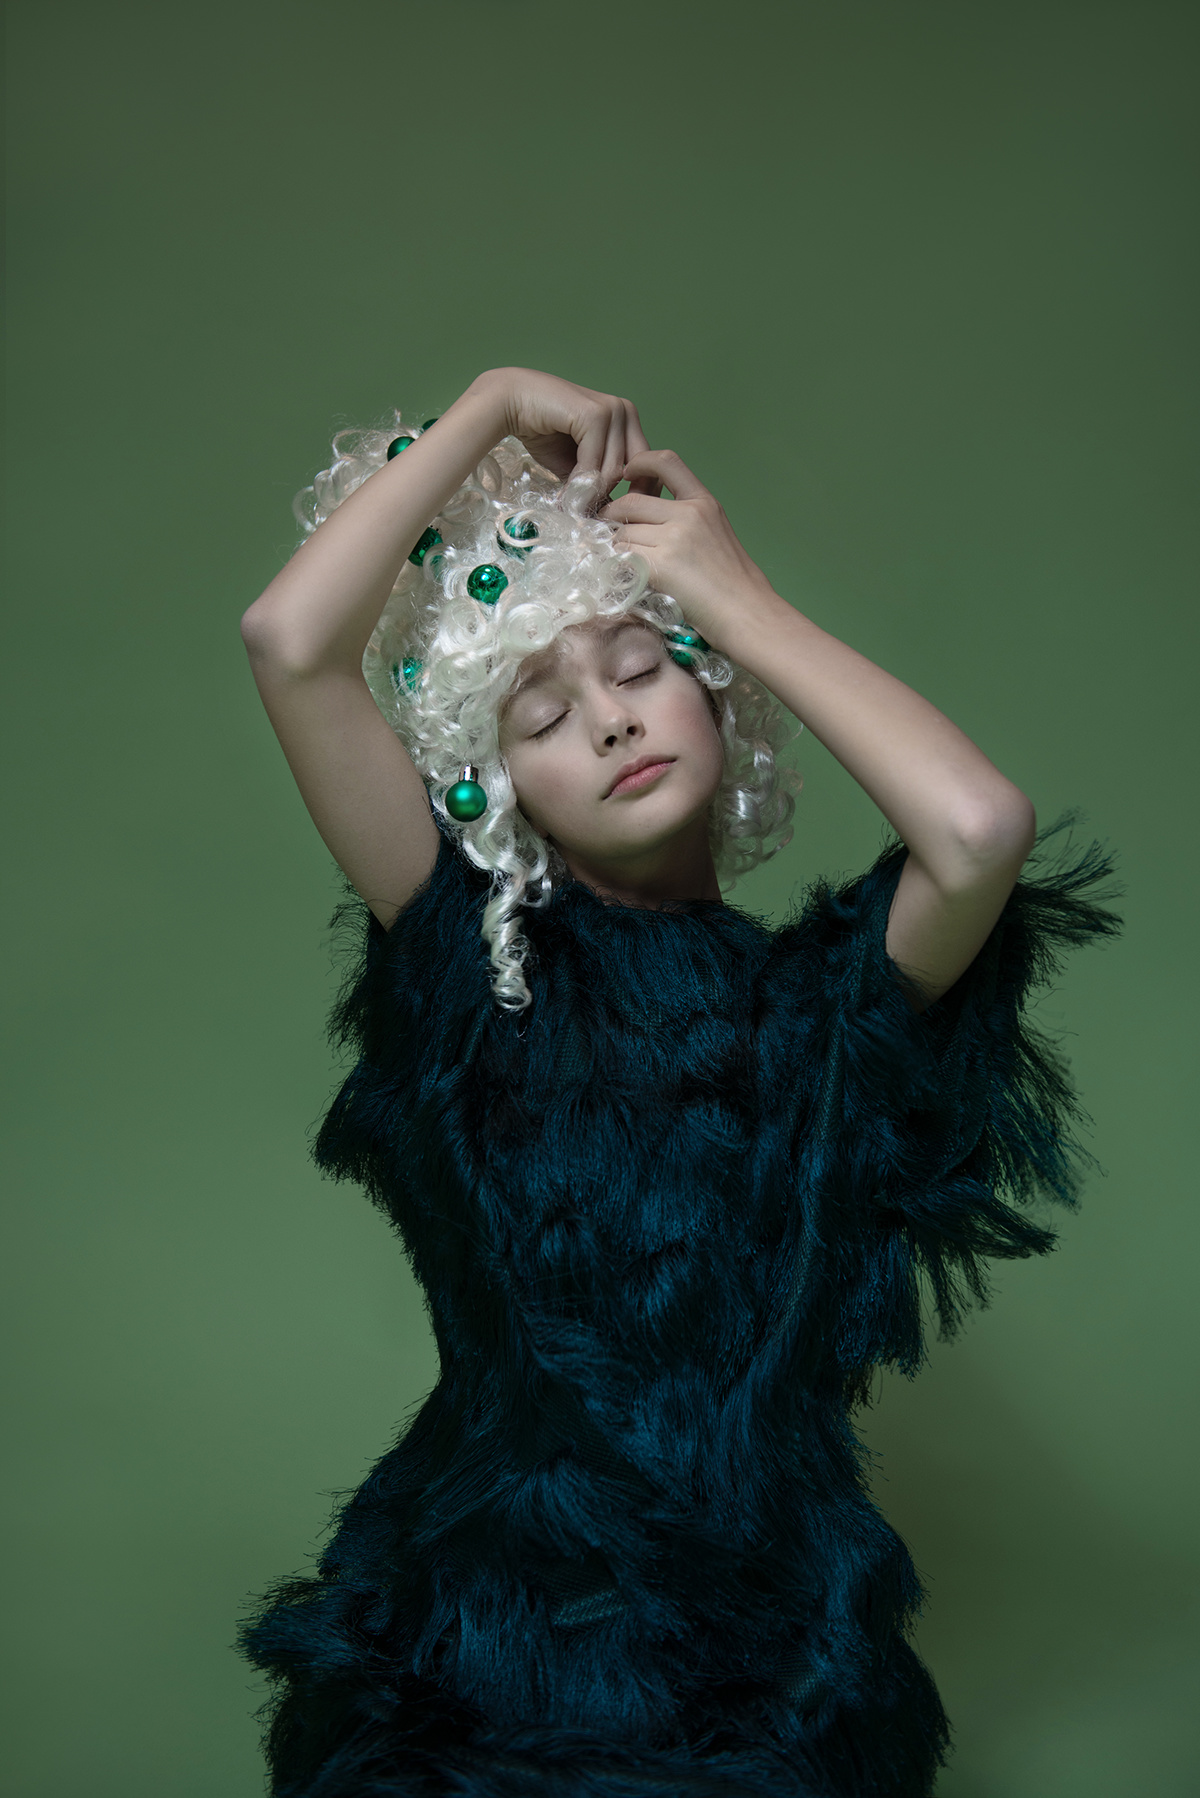 Christmas girl dress green hair art fashionart PhotoVogue conceptual vintage Style hands face White gallery